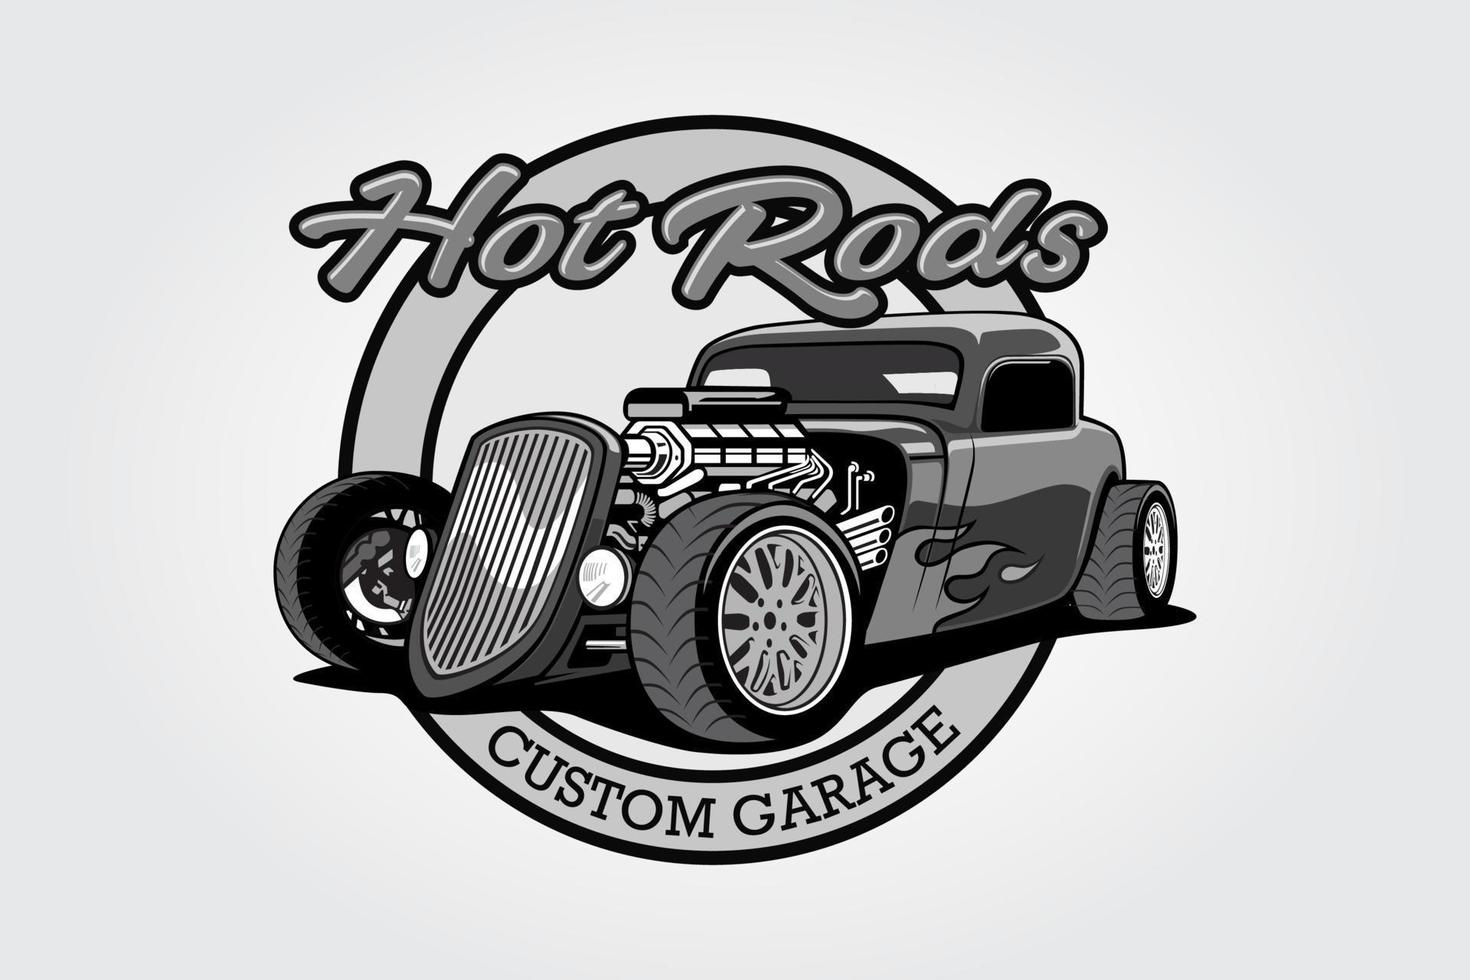 Hot Rods Costume Garage Vector Logo Template. Vector logo black white design with illustration of hot rods.